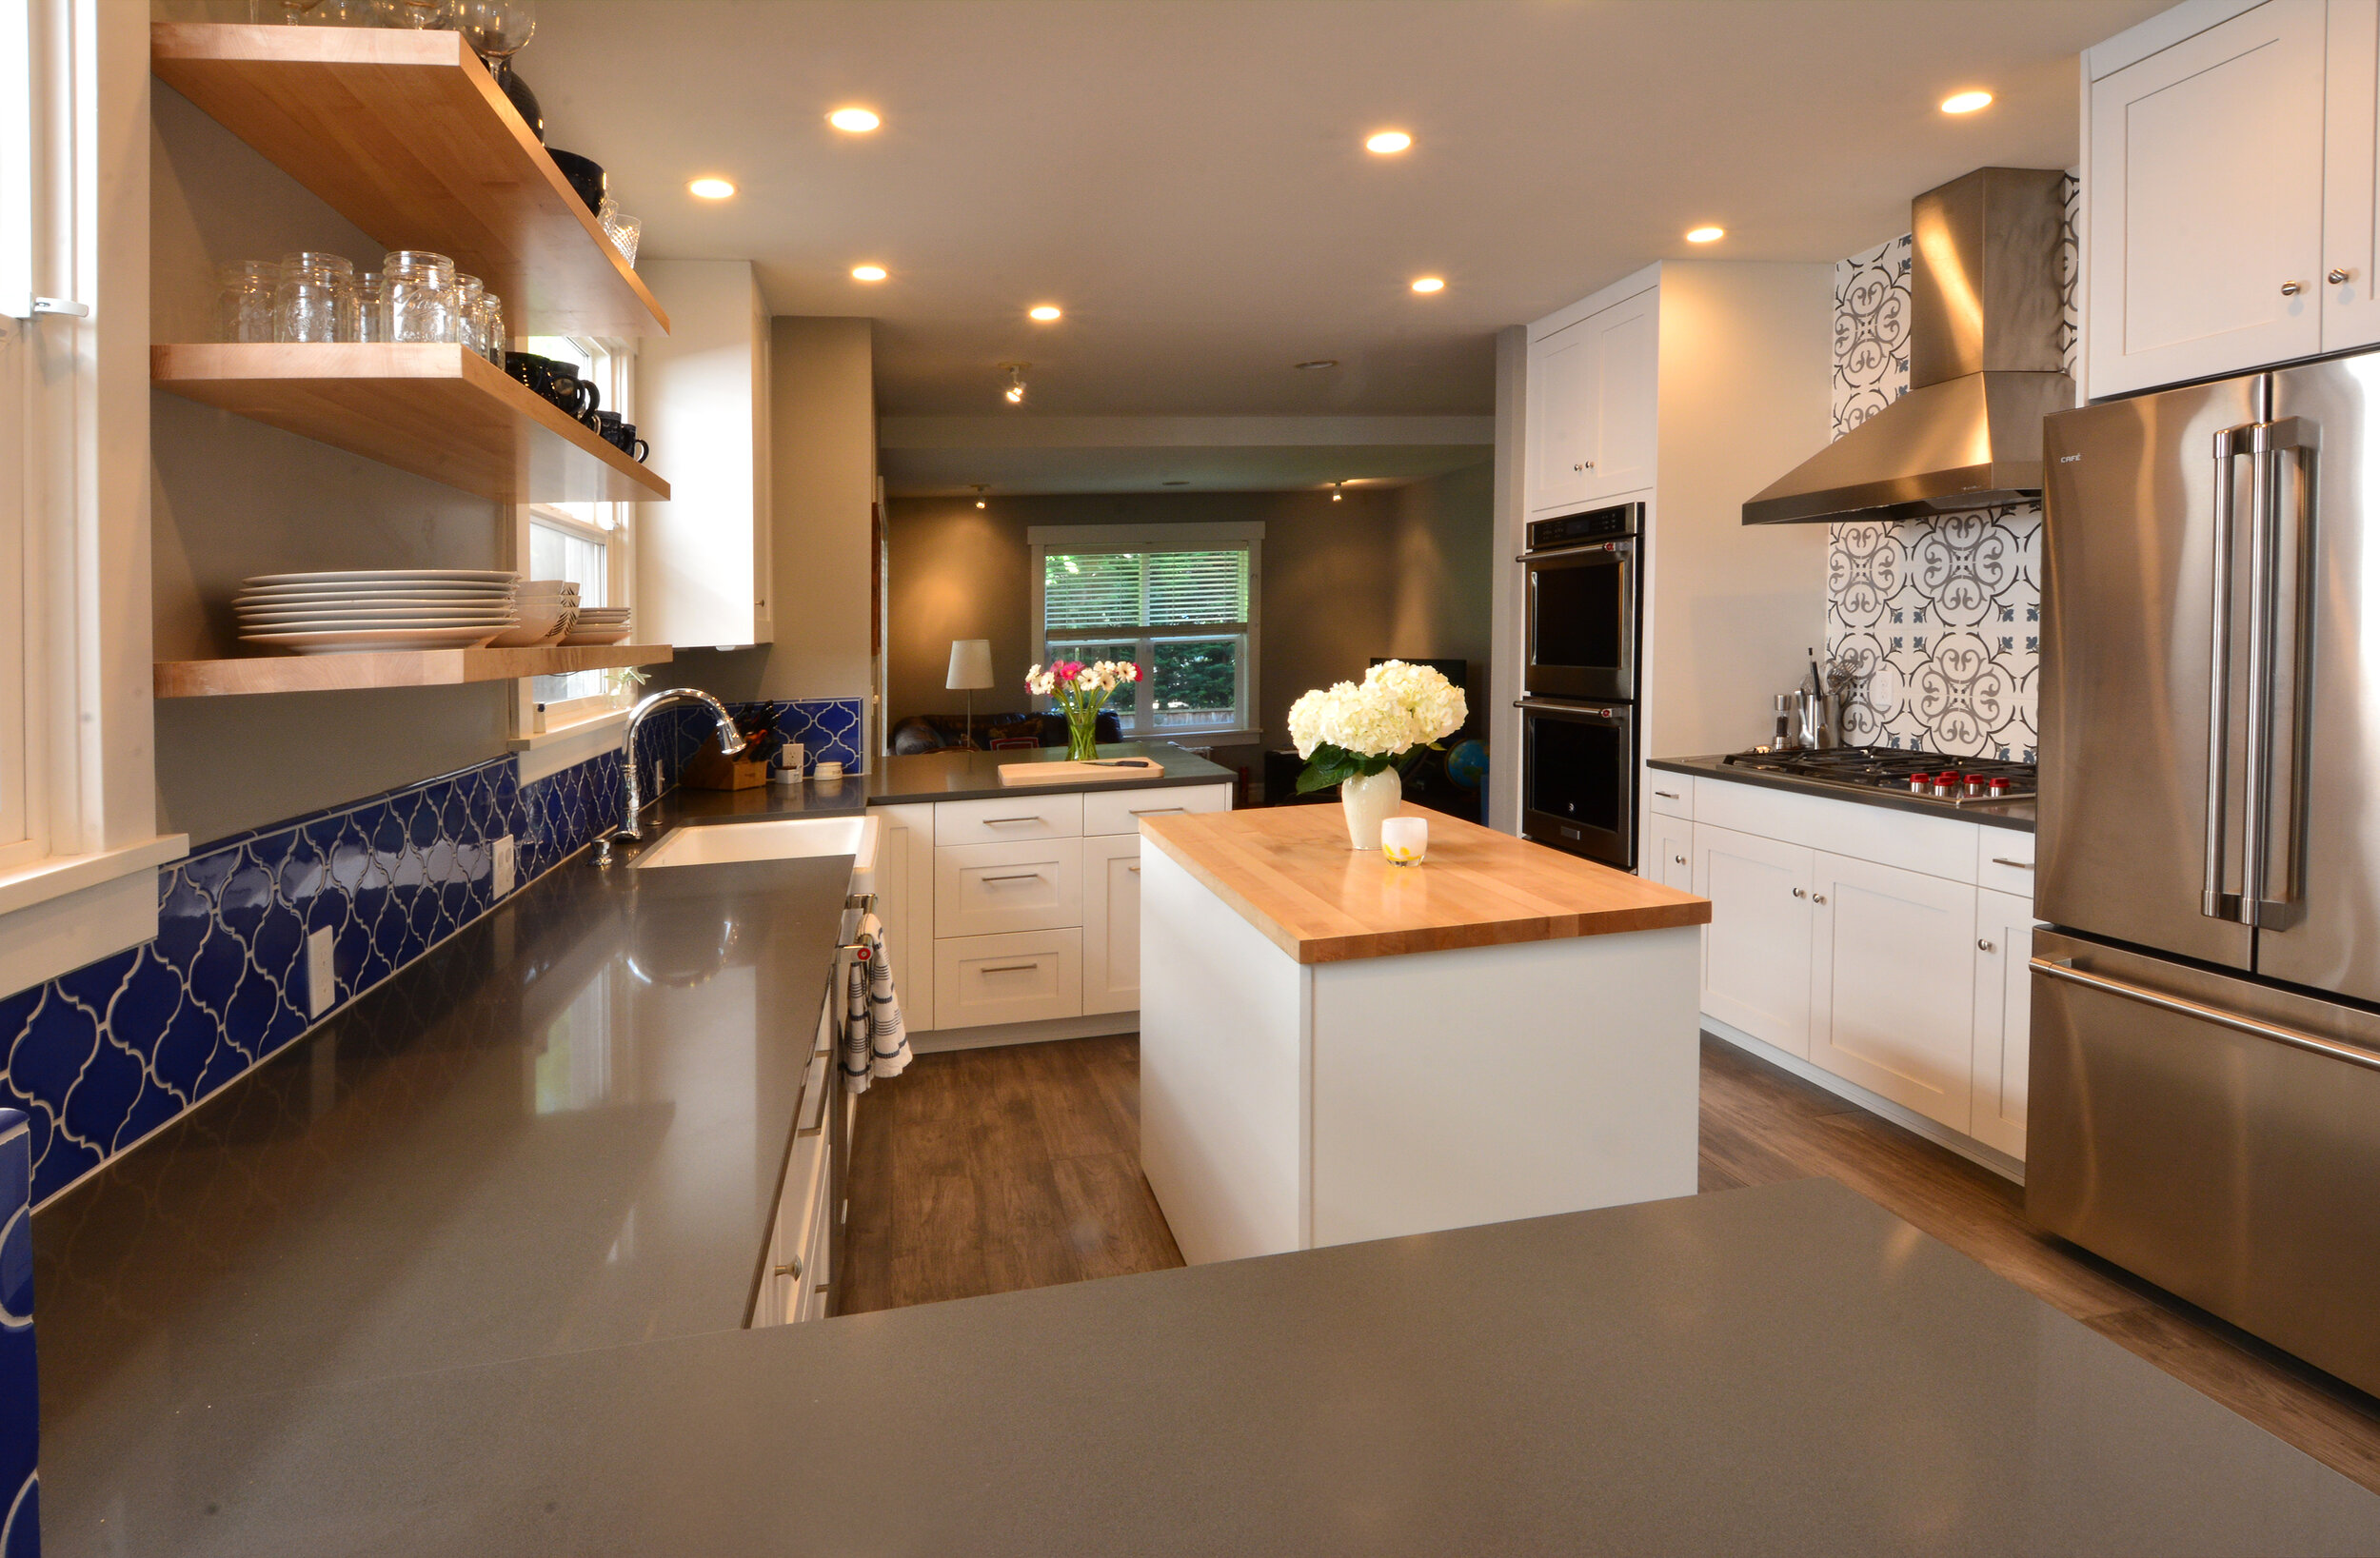 2A Carpentry Interior Projects-Portfolio - Kitchen Counter.jpg